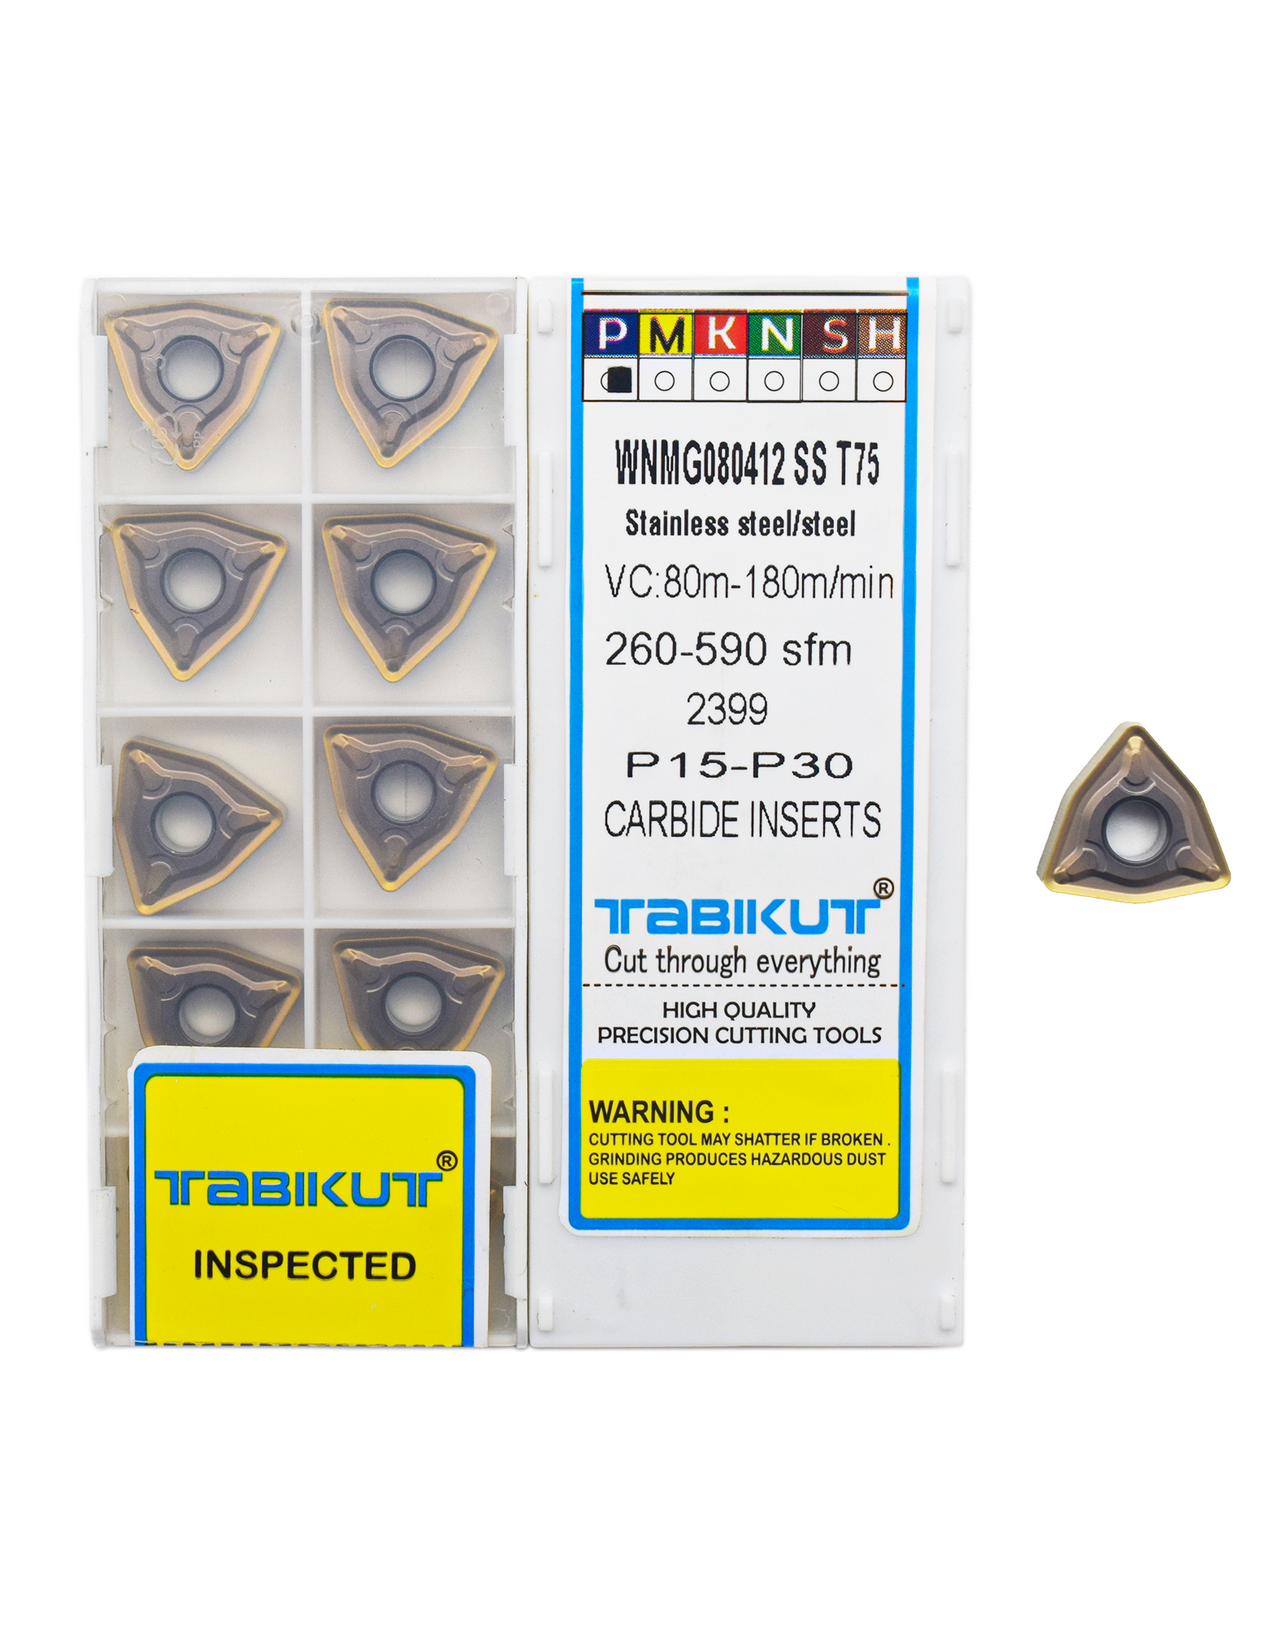 WNMG080408 specially stainless steel TABIKUTcarbide insert (1box) pack of 10